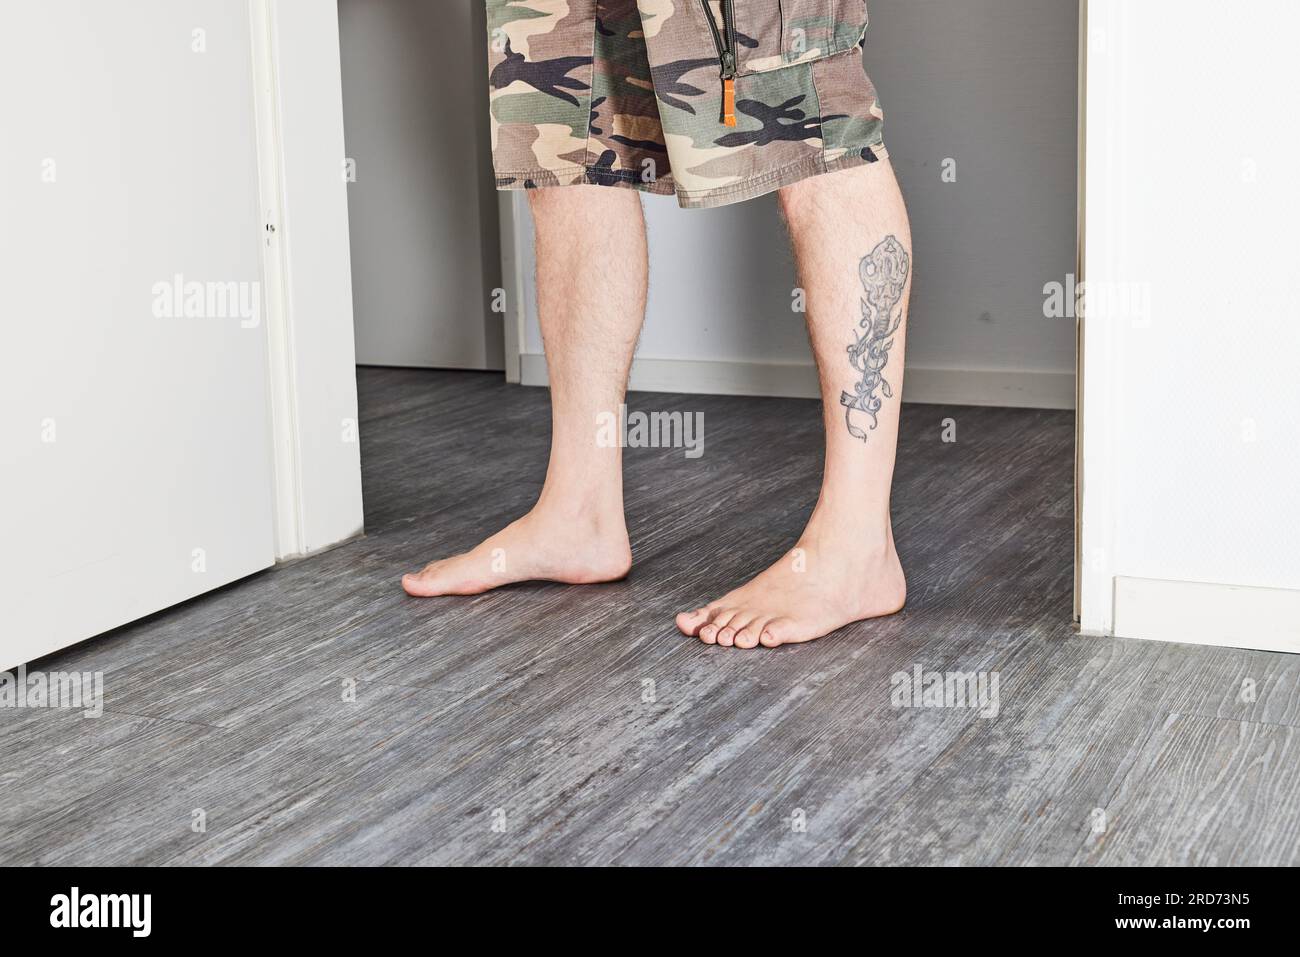 Man standing barefoot on floor Stock Photo - Alamy